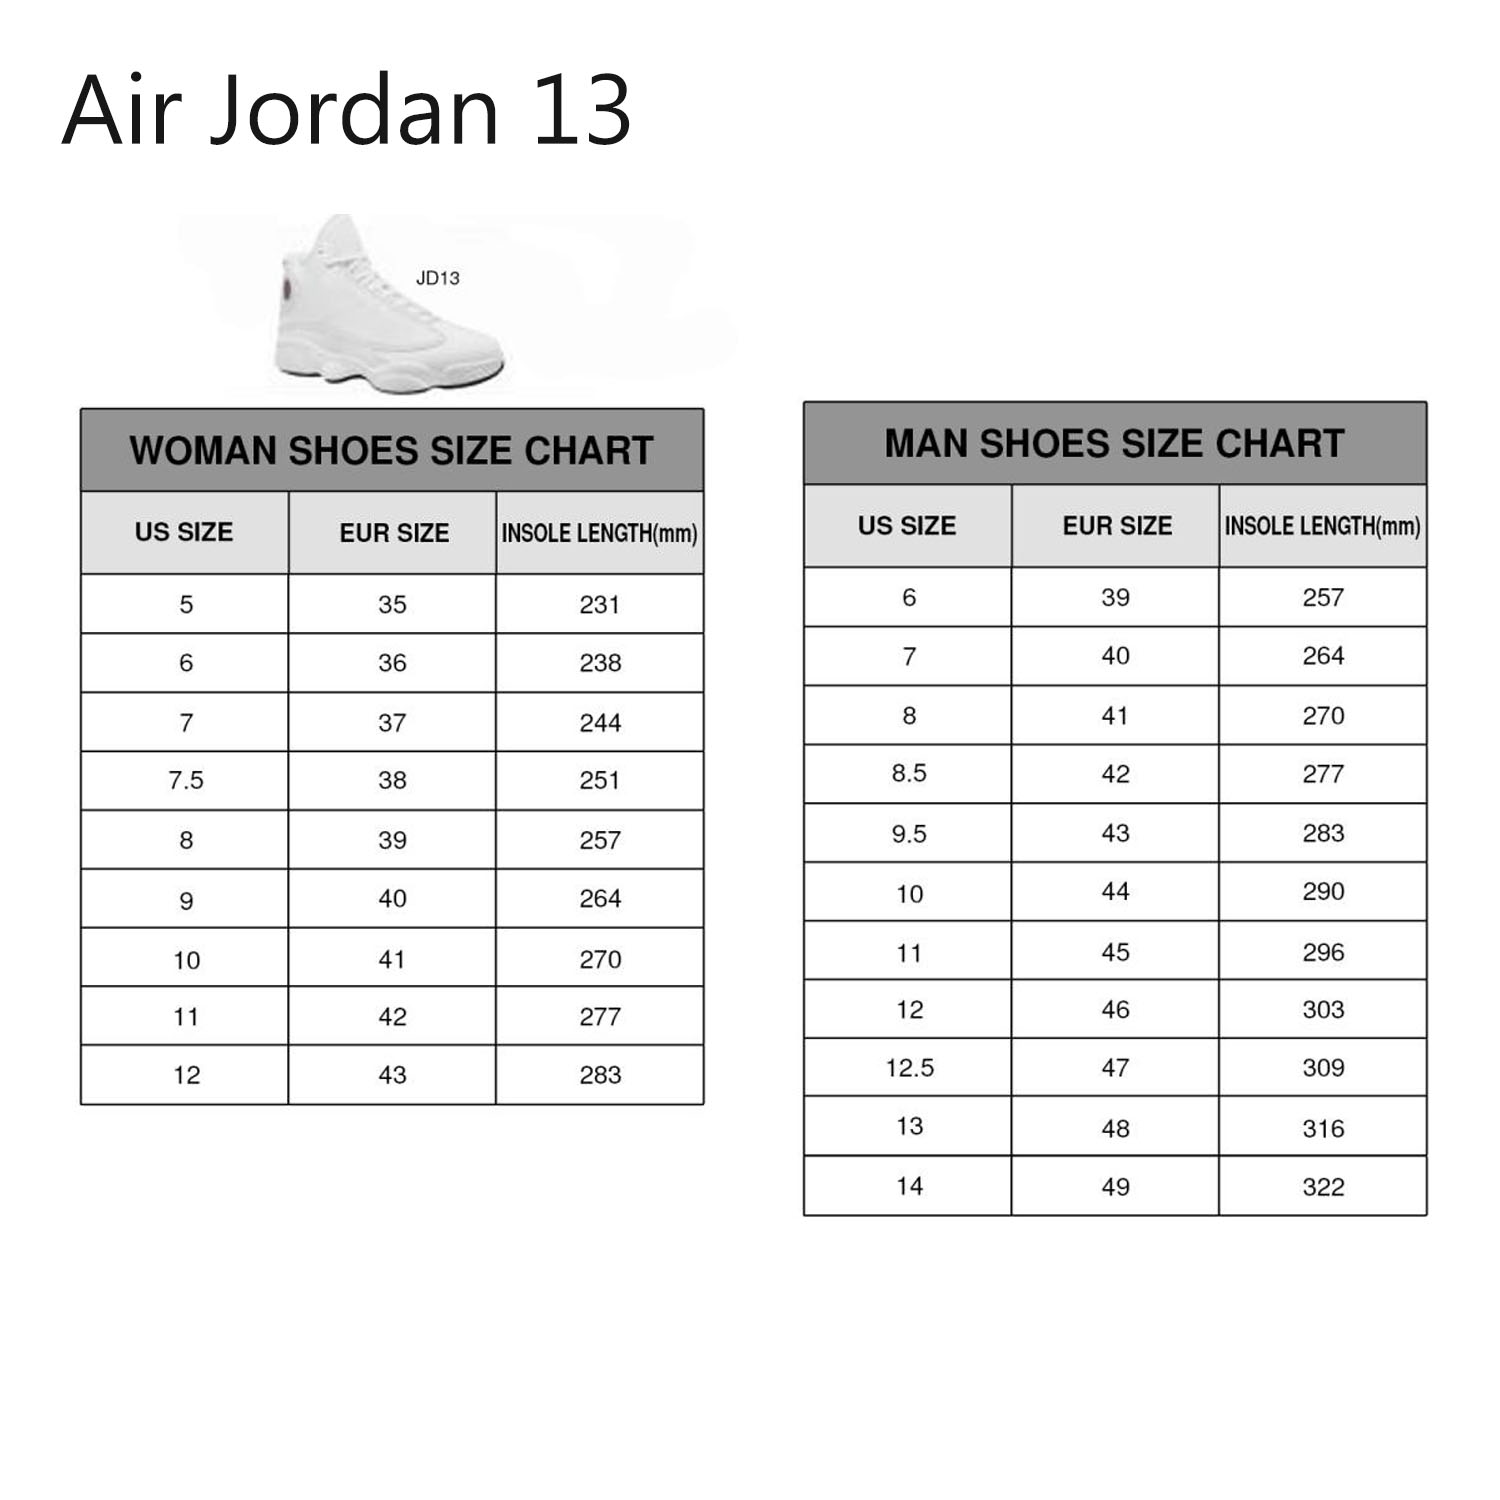 Air Jordan 13 Size Chartpx Green Bay Packers Jordan 13 Personalized Name Shoes